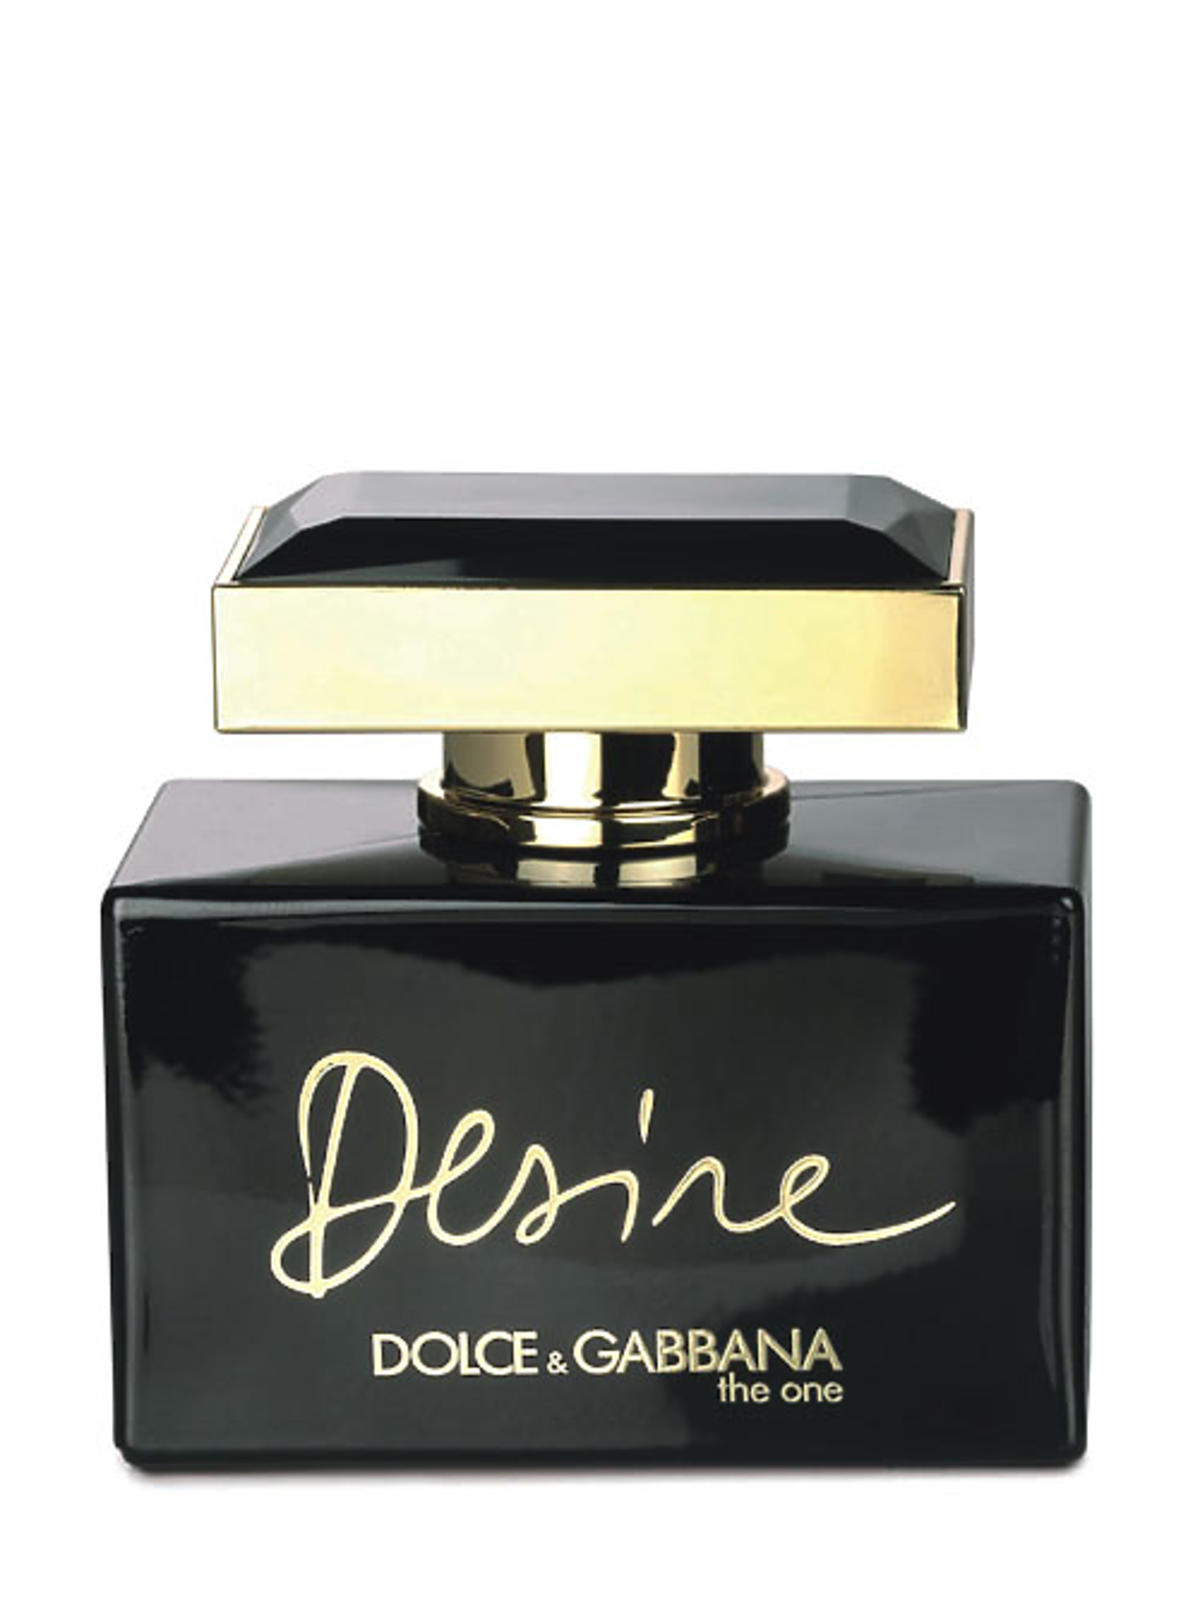 Desire EDP Dolce Gabbana